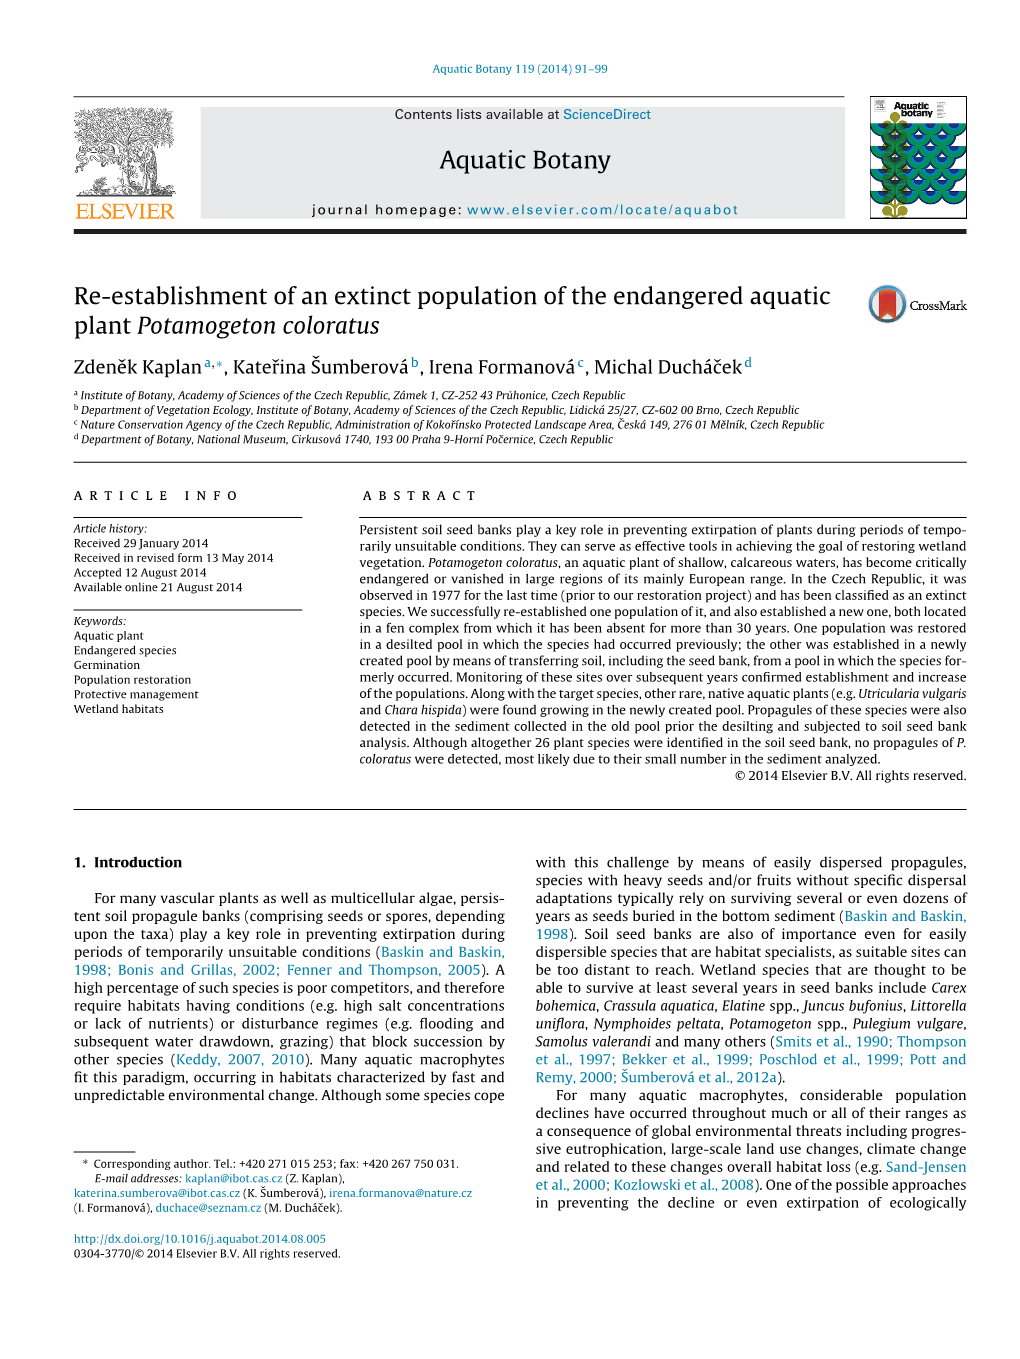 Re-Establishment of an Extinct Population of the Endangered Aquatic Plant Potamogeton Coloratus